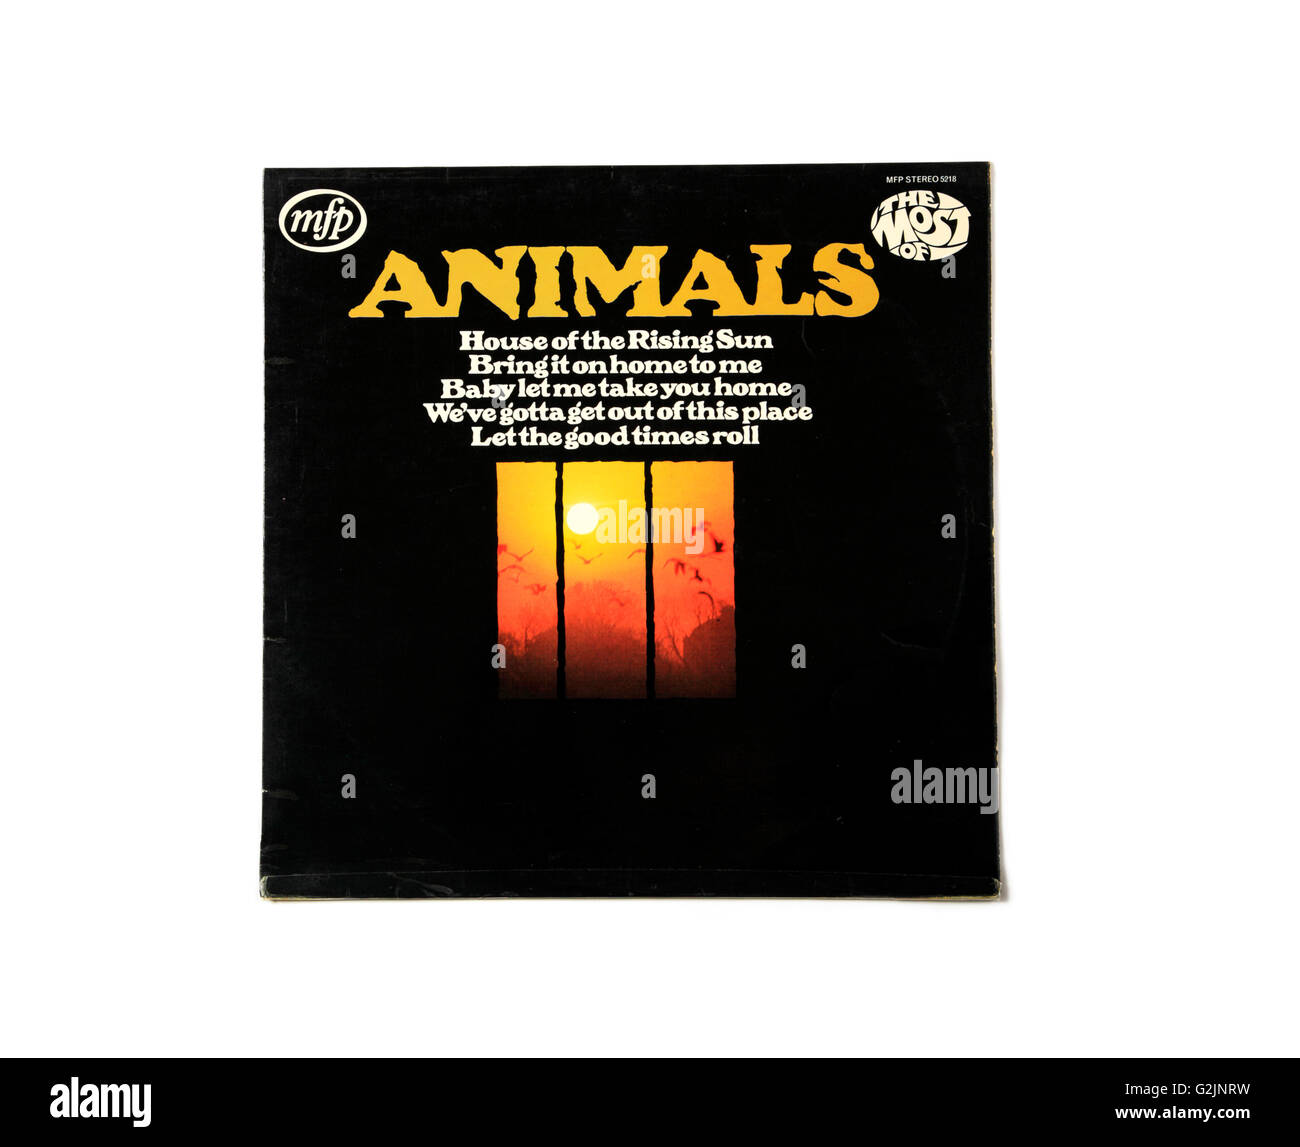 POSSESSED The Eyes Of Horror - Vintage vinyl album cover Stock Photo - Alamy